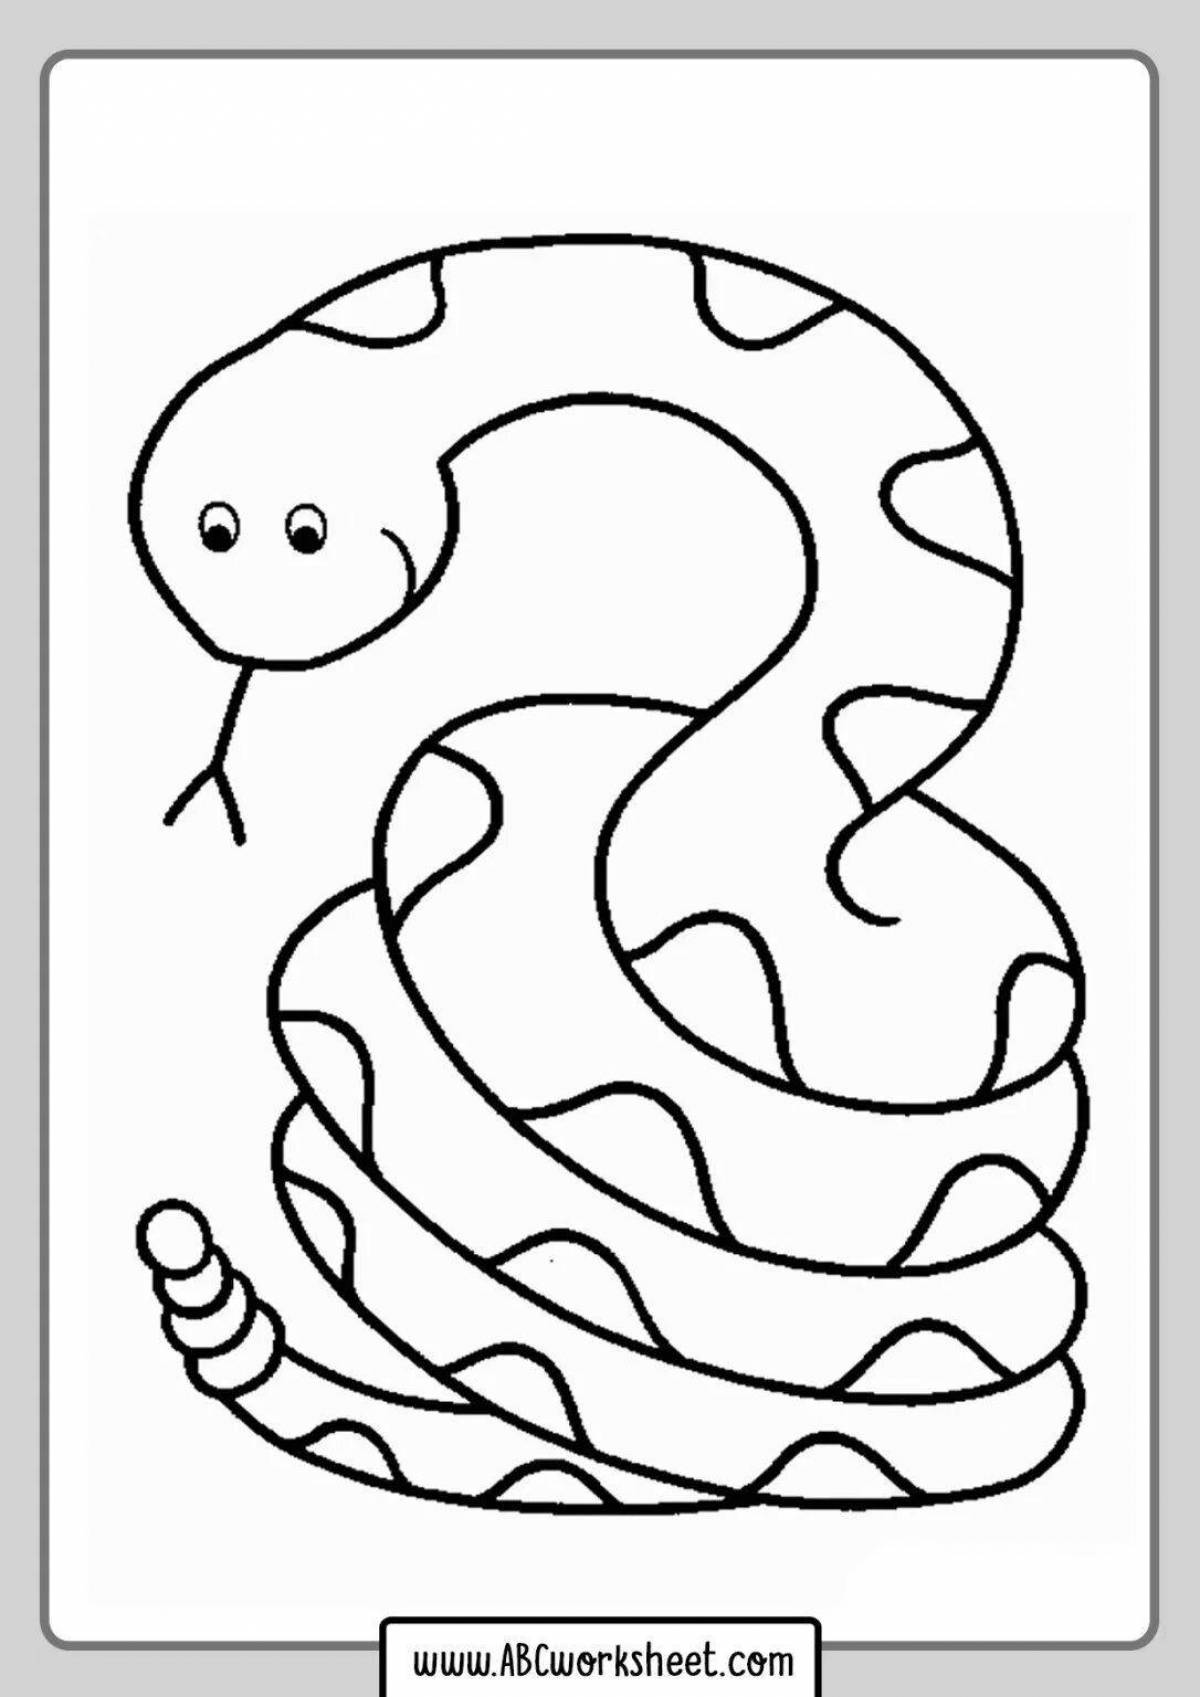 Cute snake coloring book for preschoolers